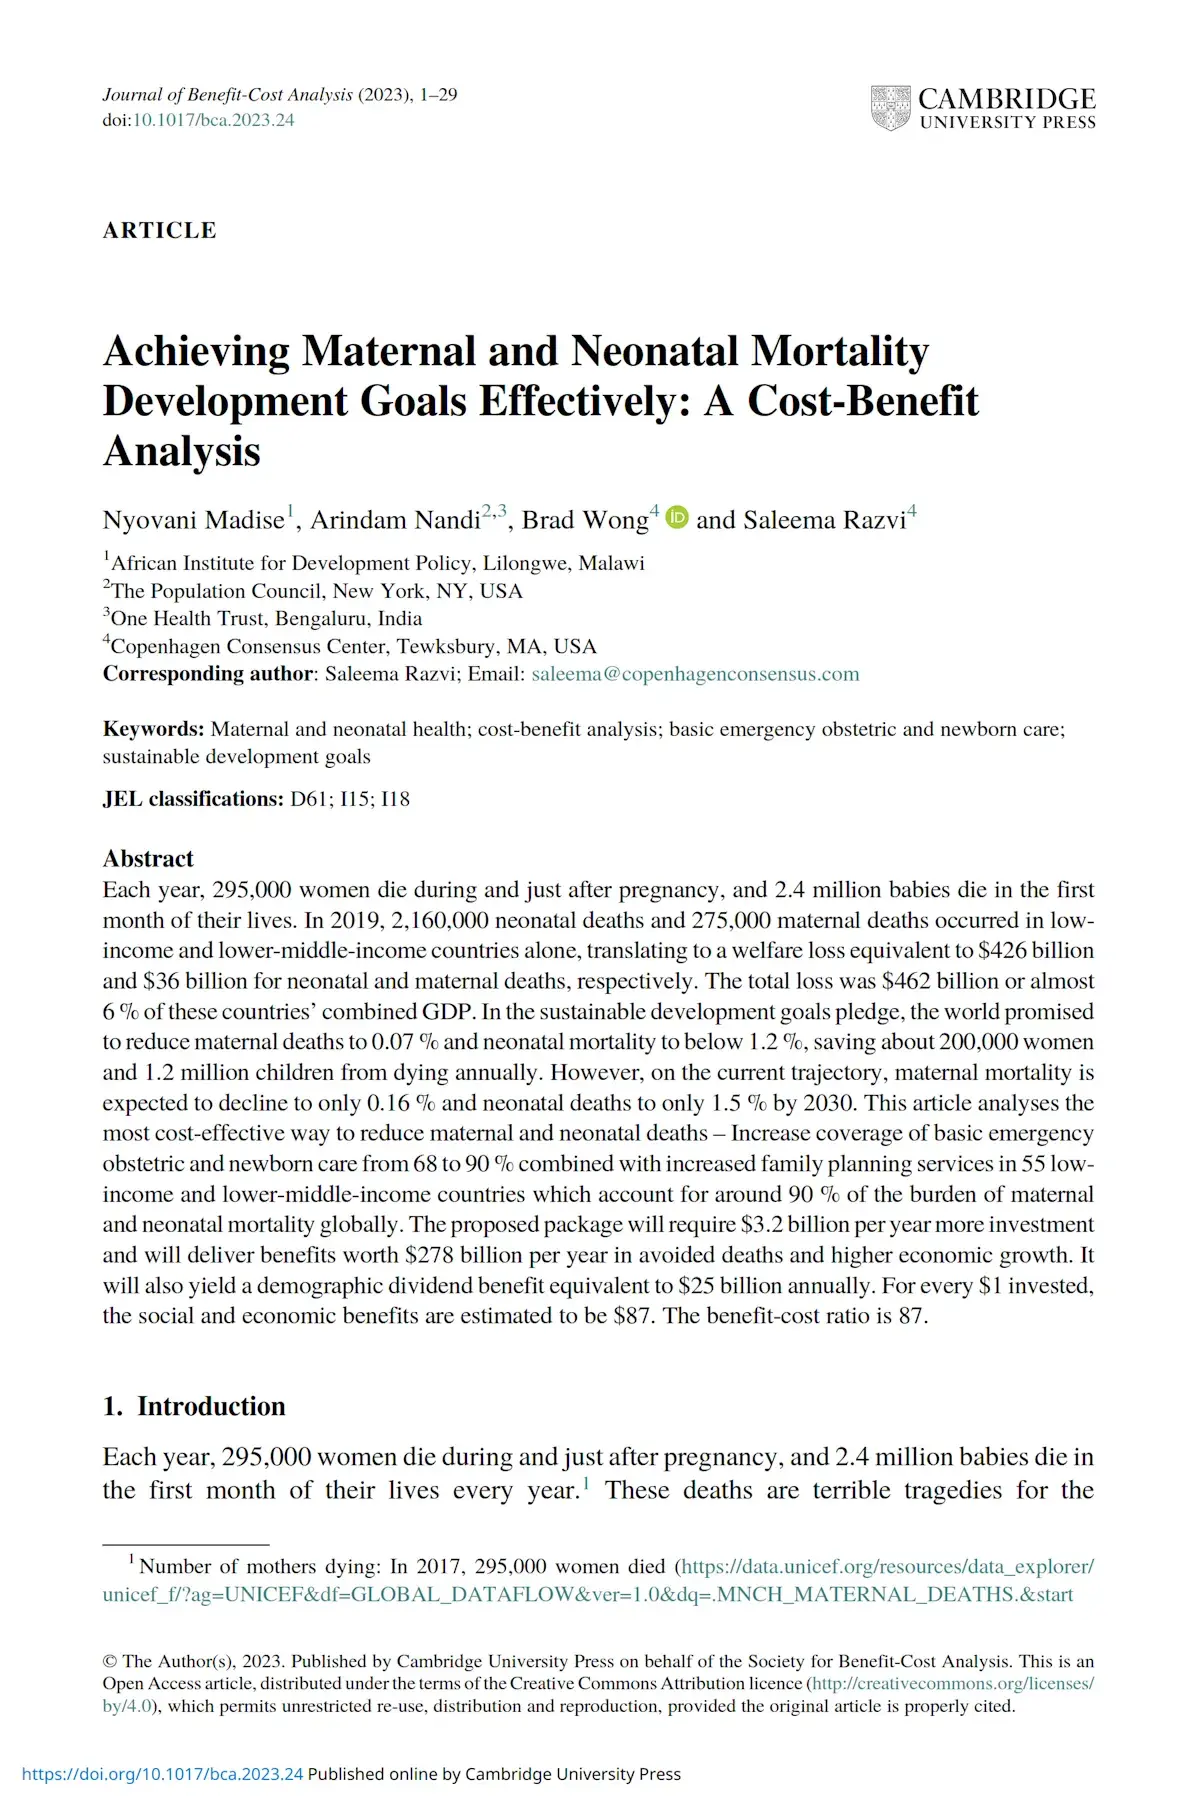 Maternal and Neonatal Health